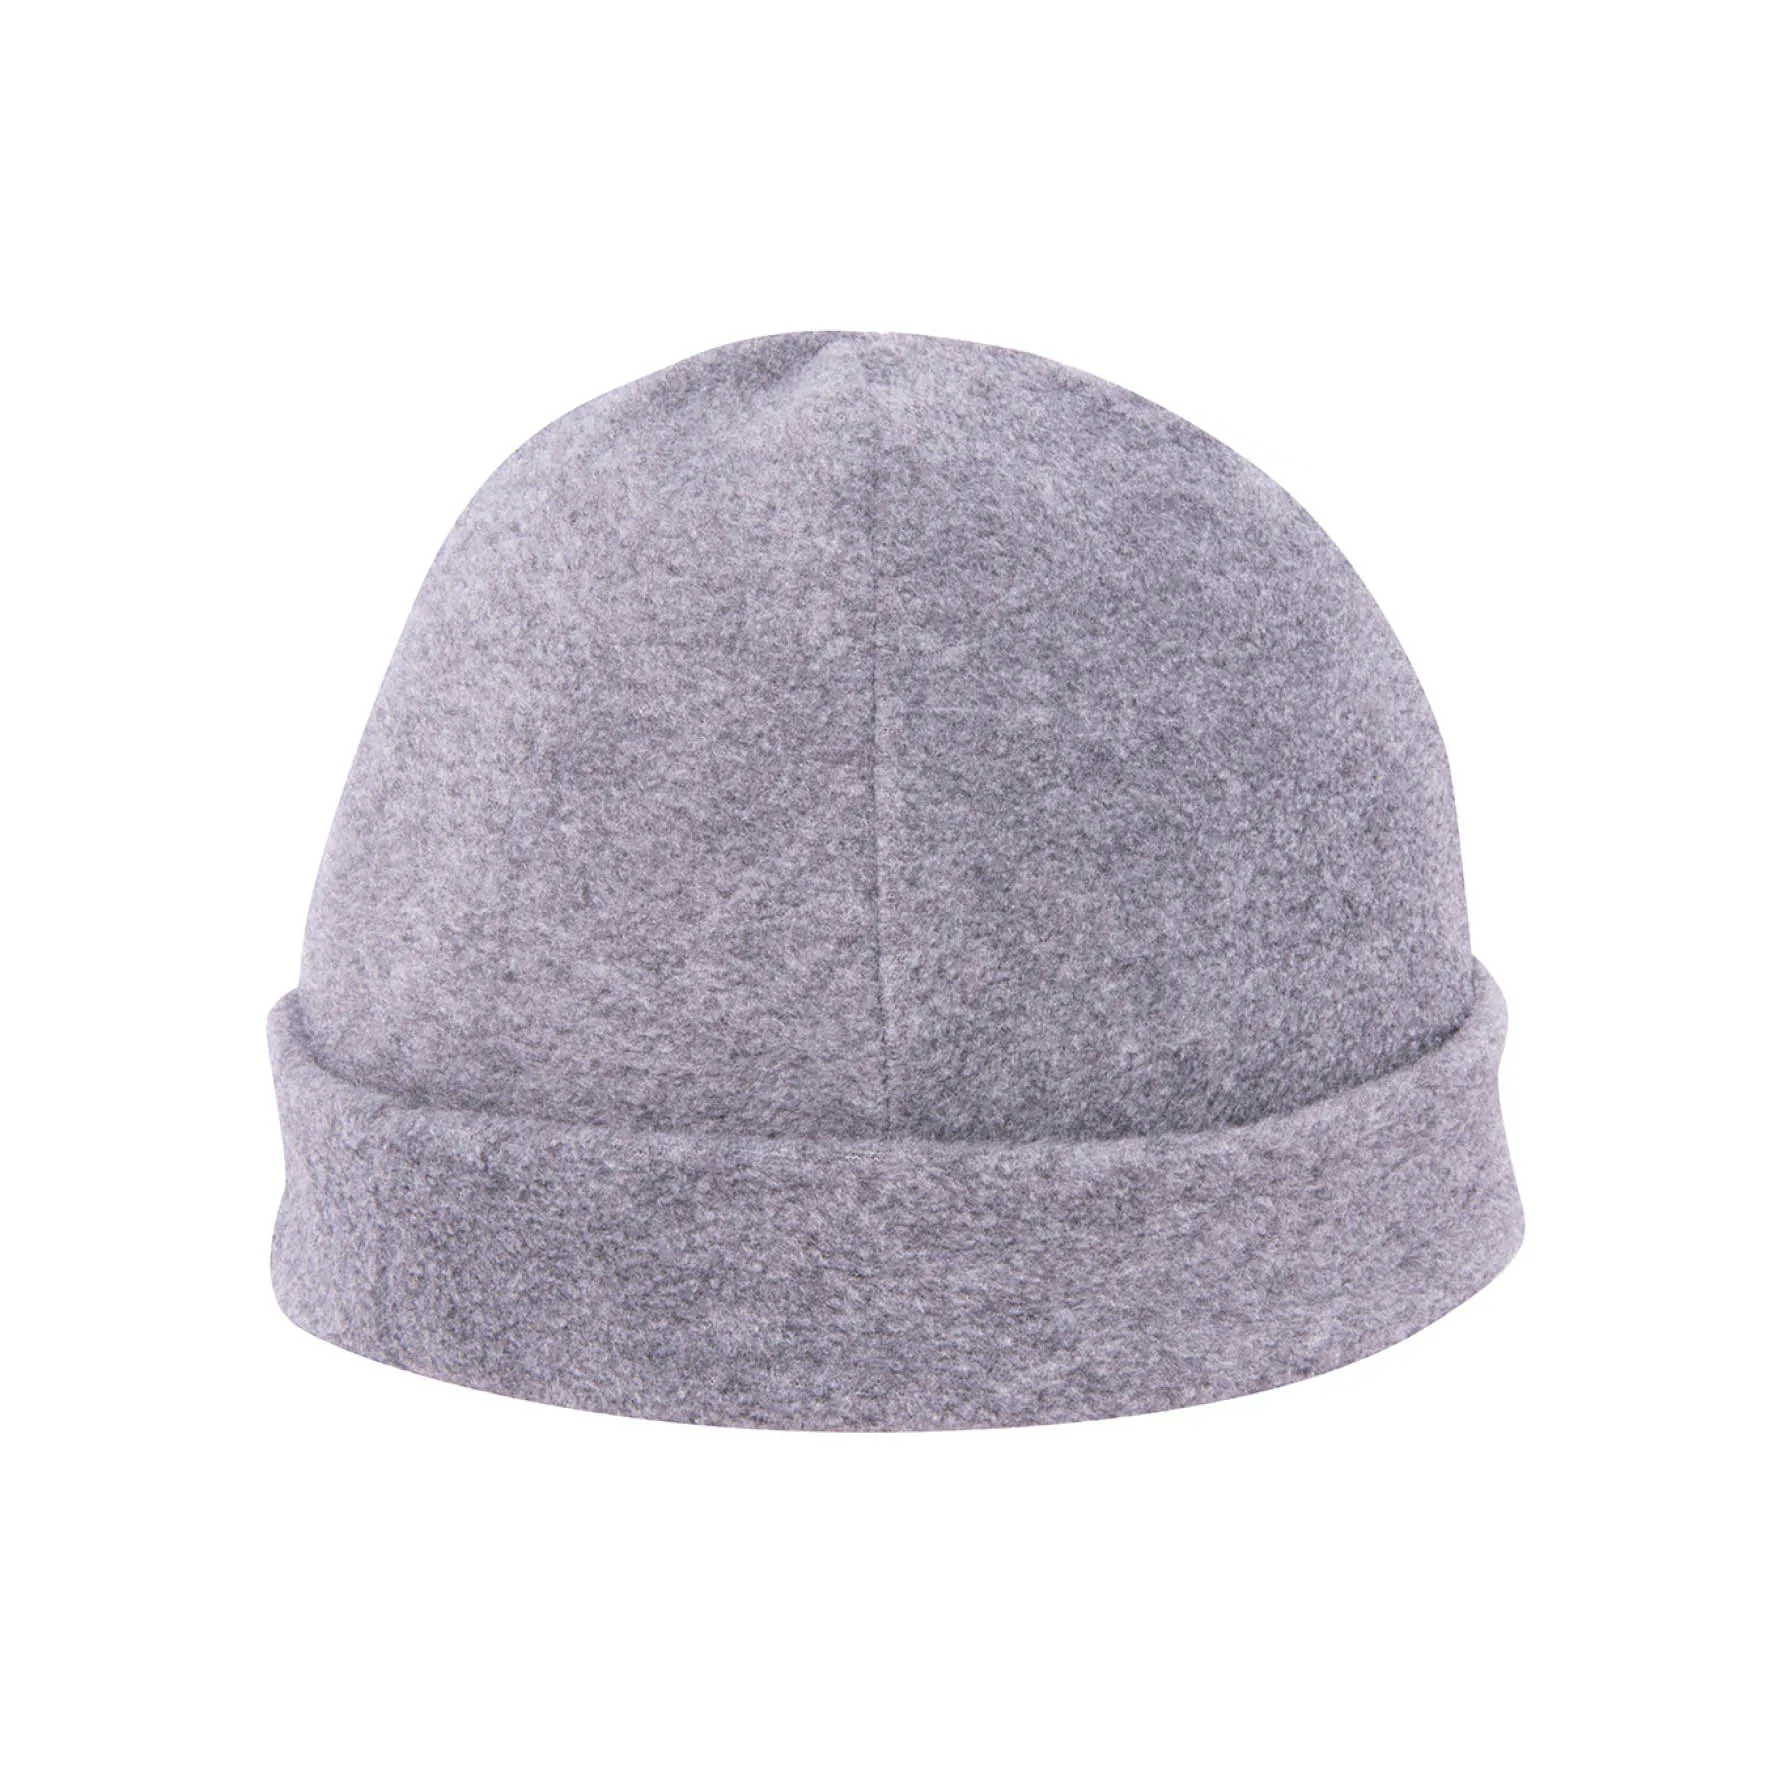 Promotional Fleece Hat - Beaumont Leys